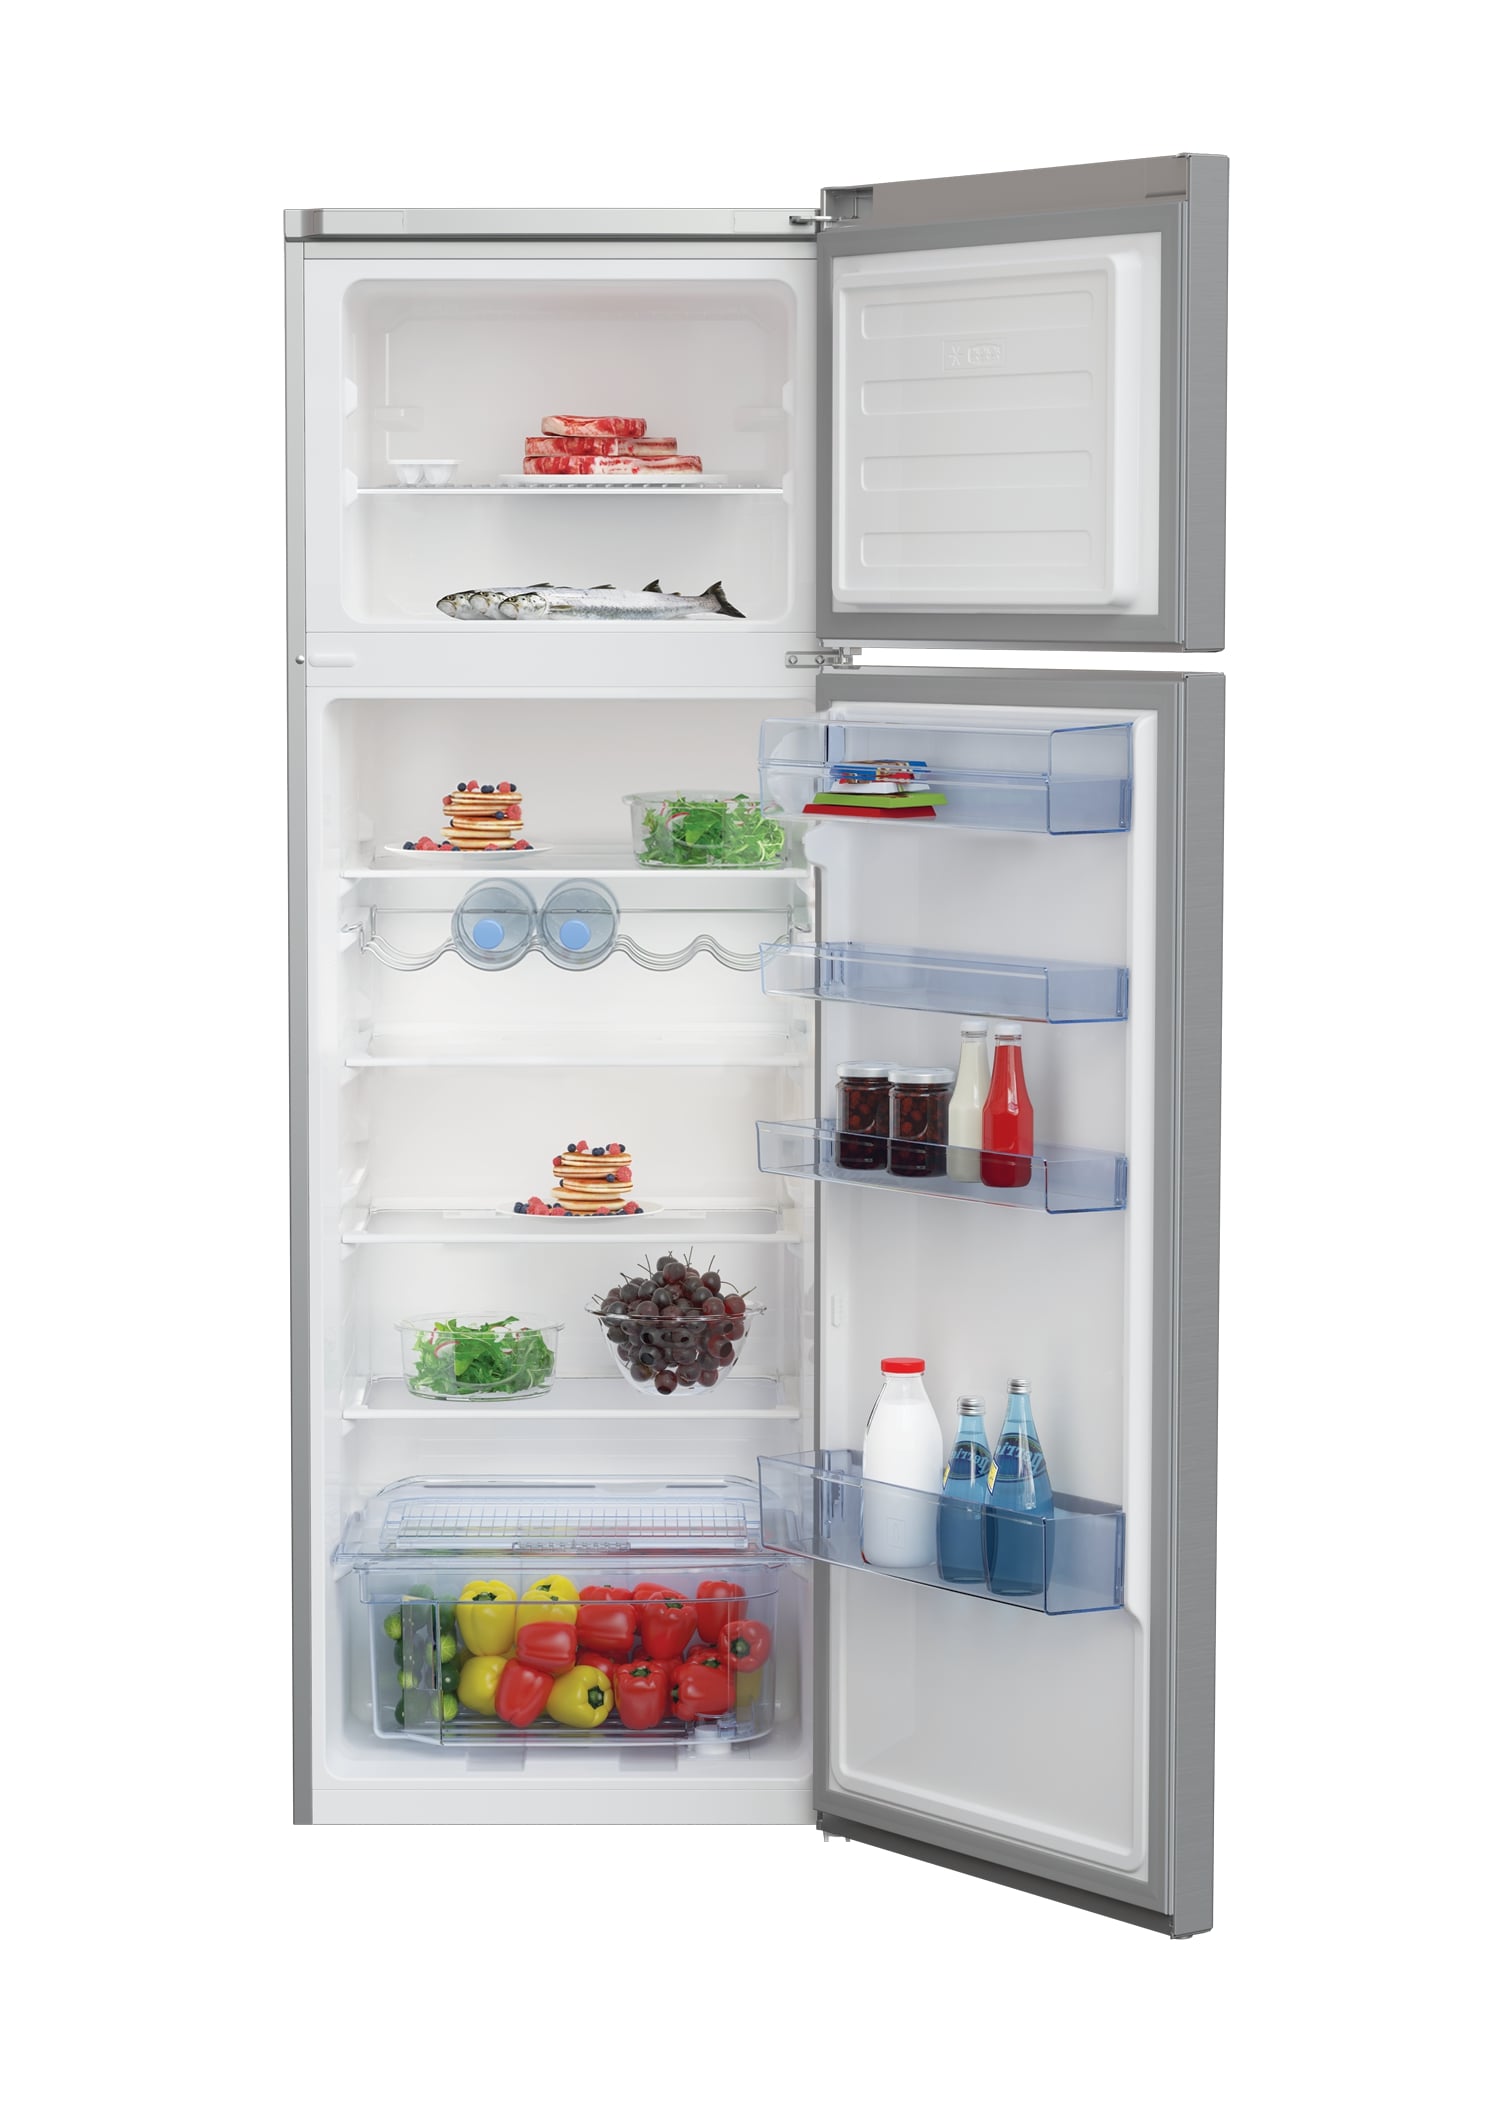 Beko Refrigerator with Top Freezer 340L - Silver